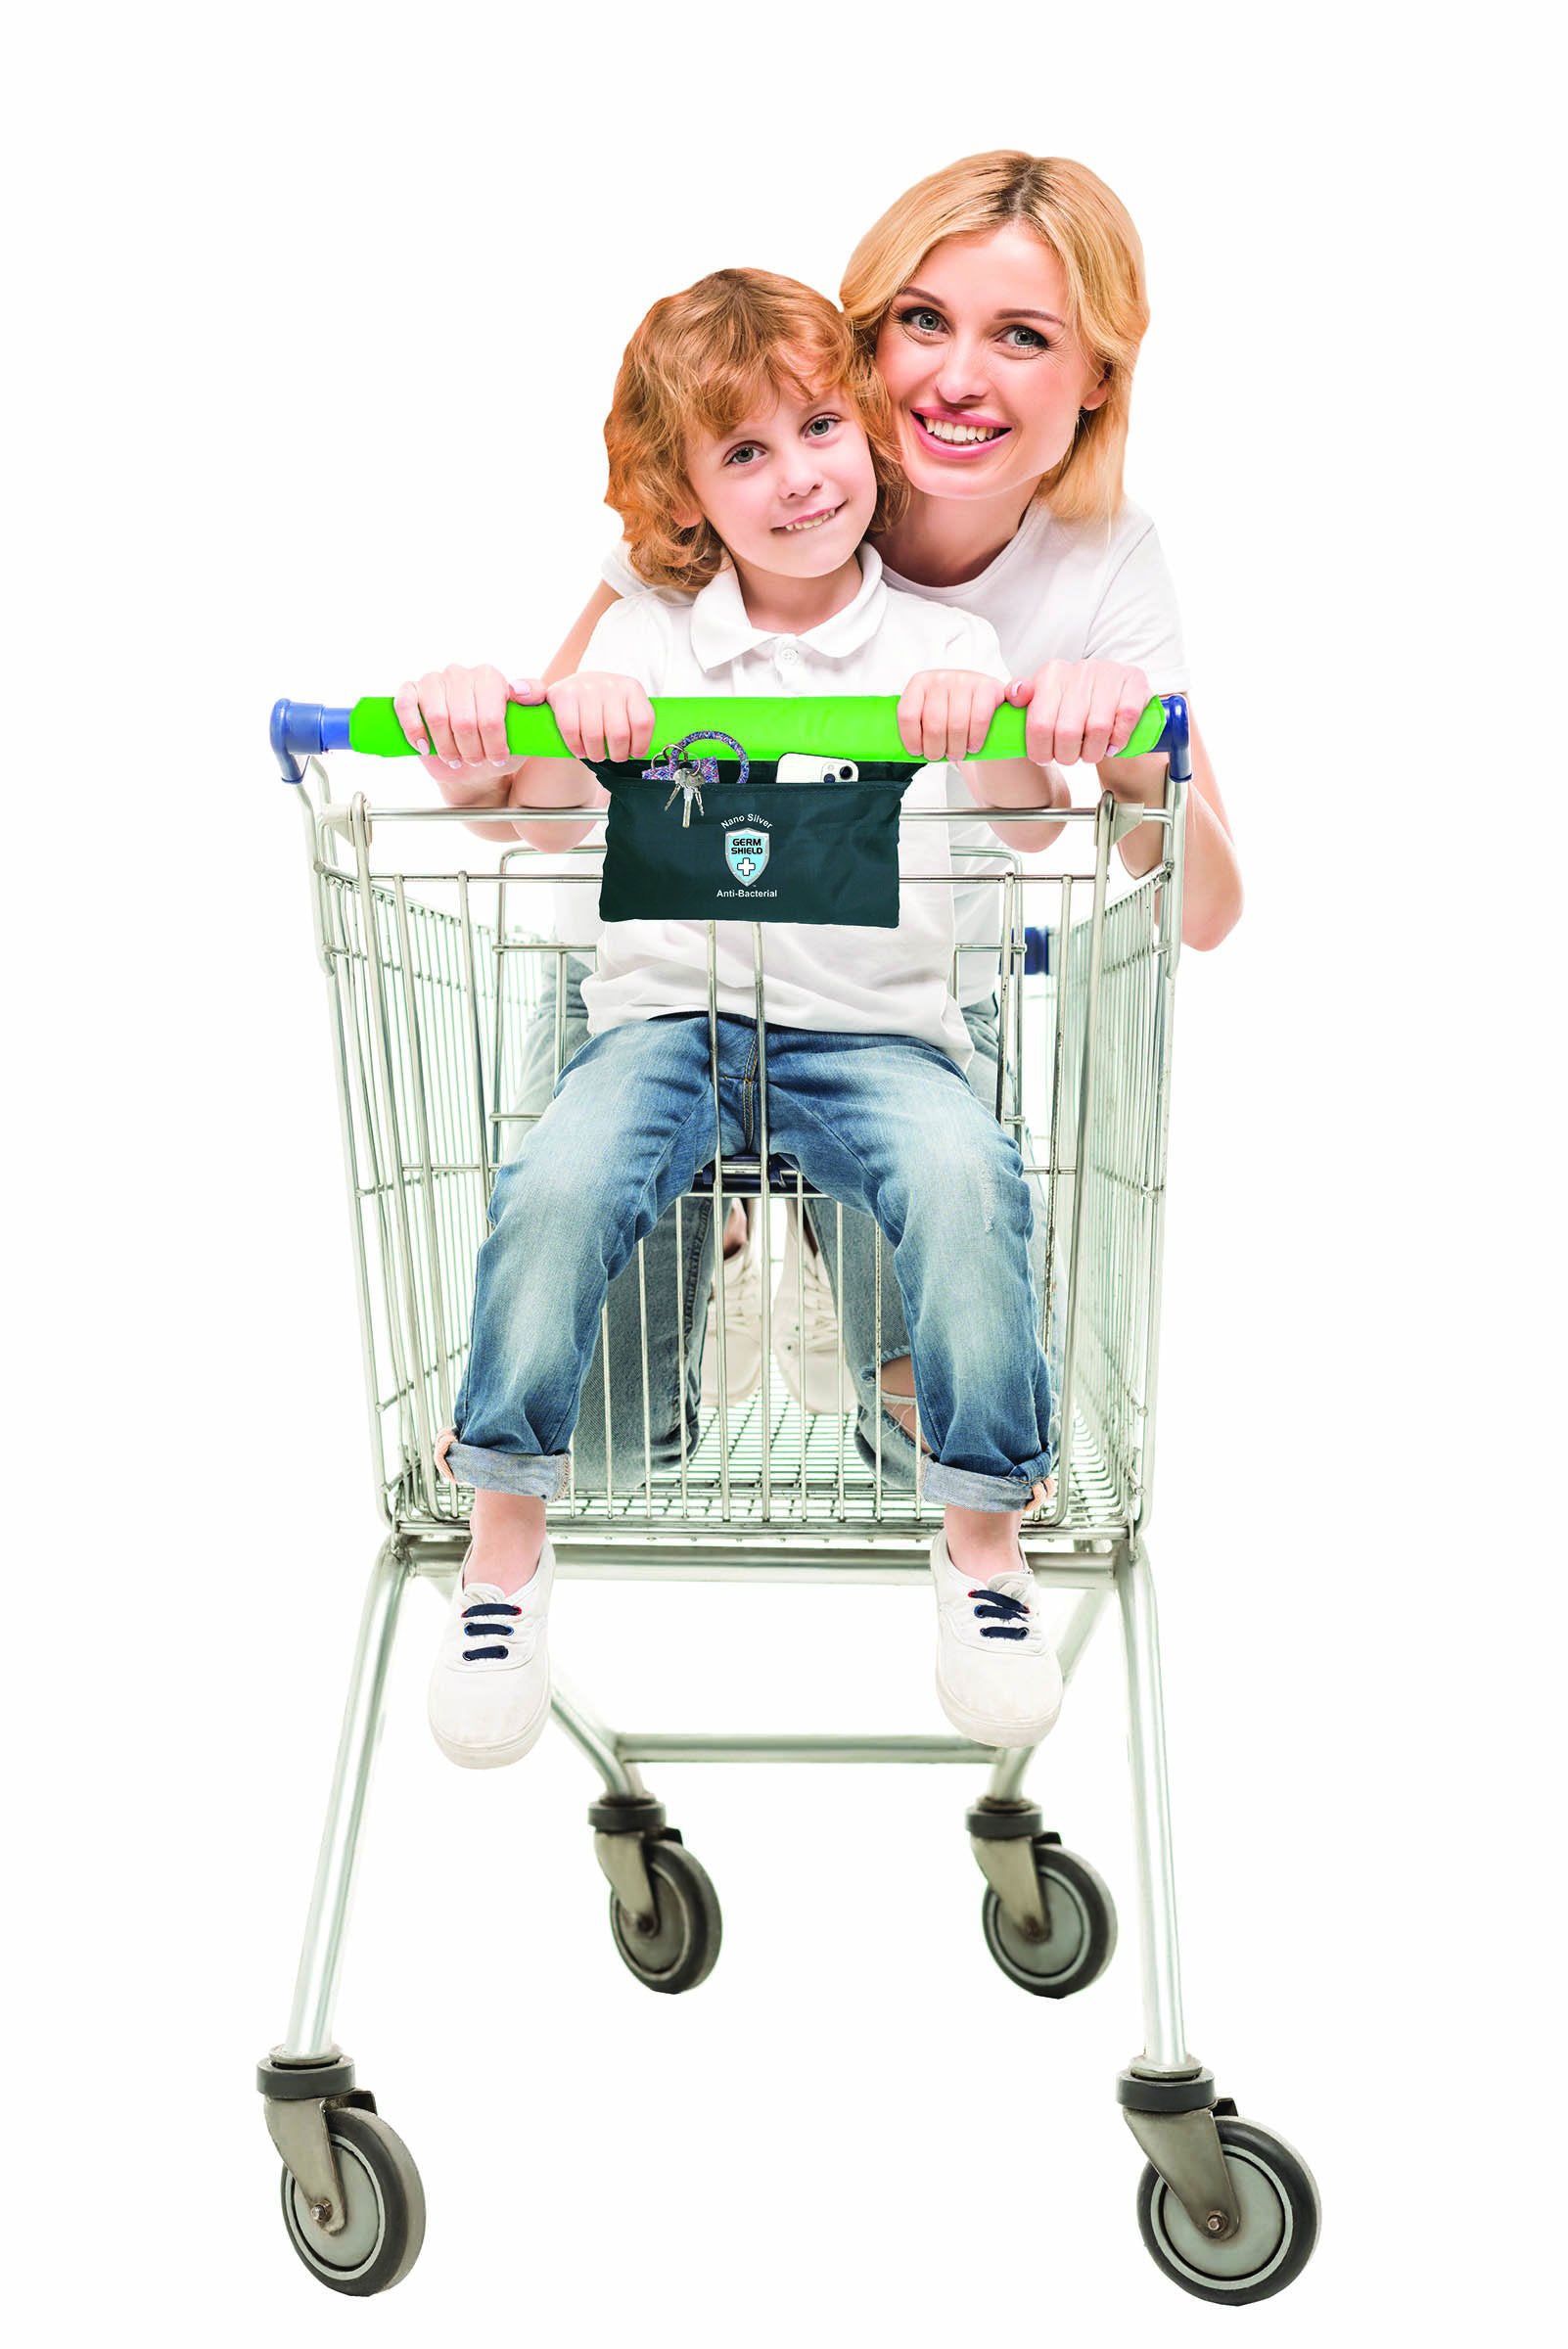 Antibacterial Shopping Cart Handle Cover